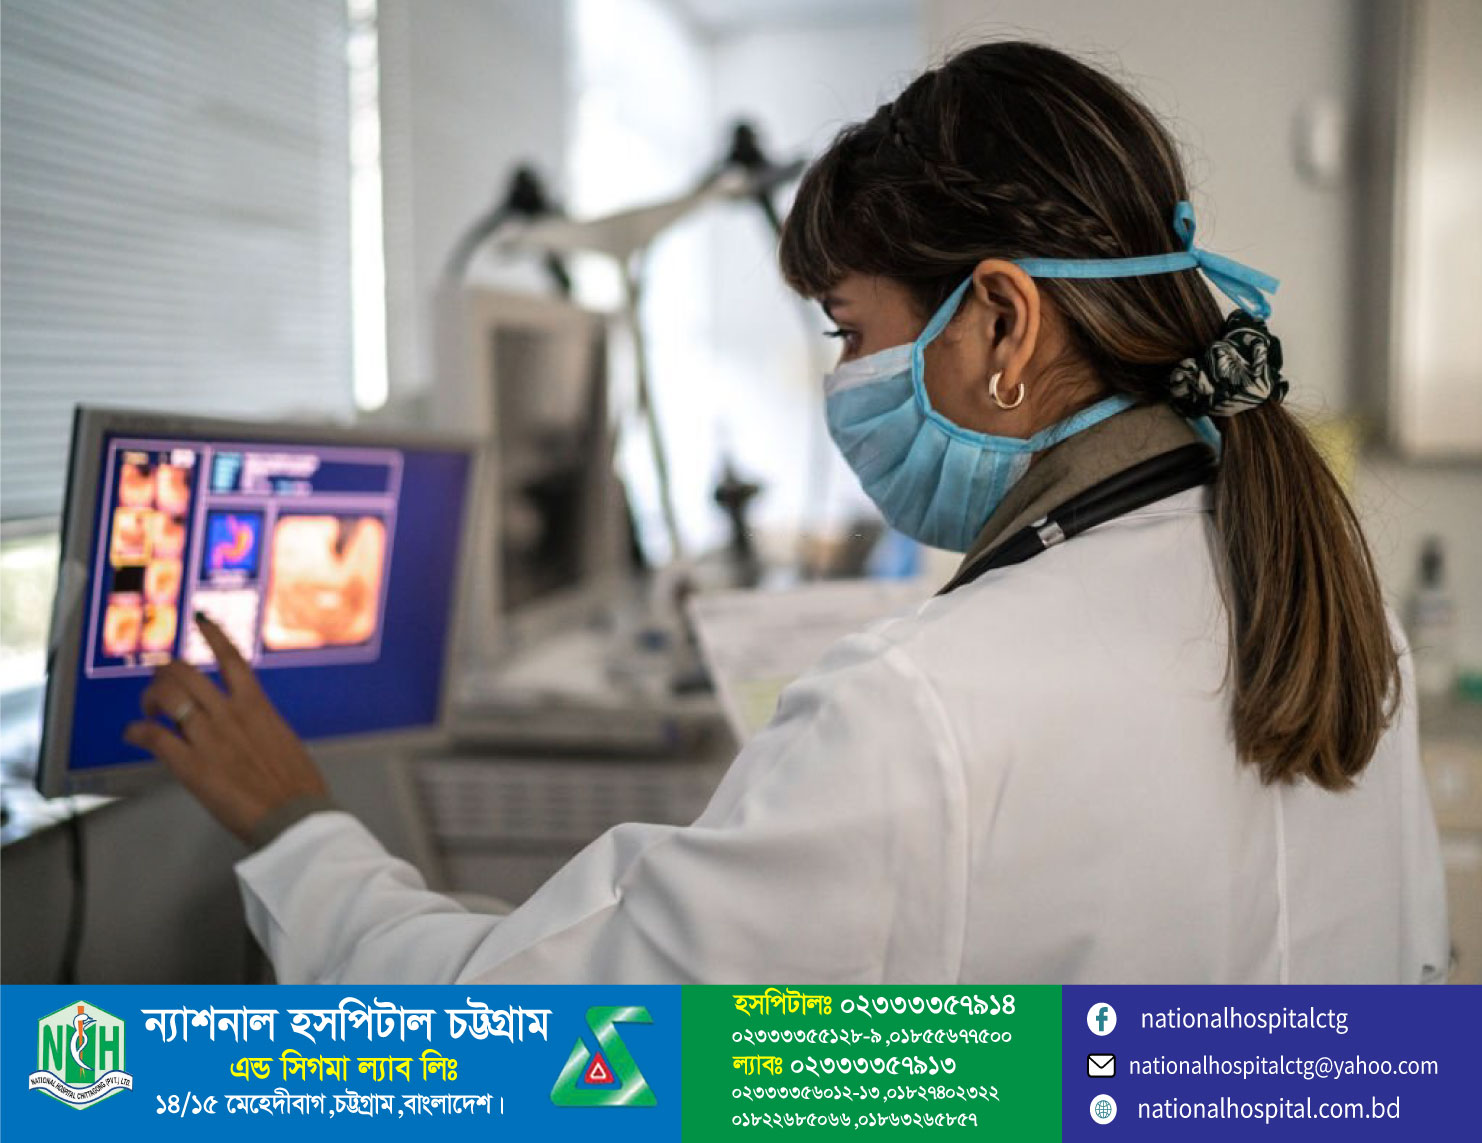 Endoscopy test price in Bangladesh